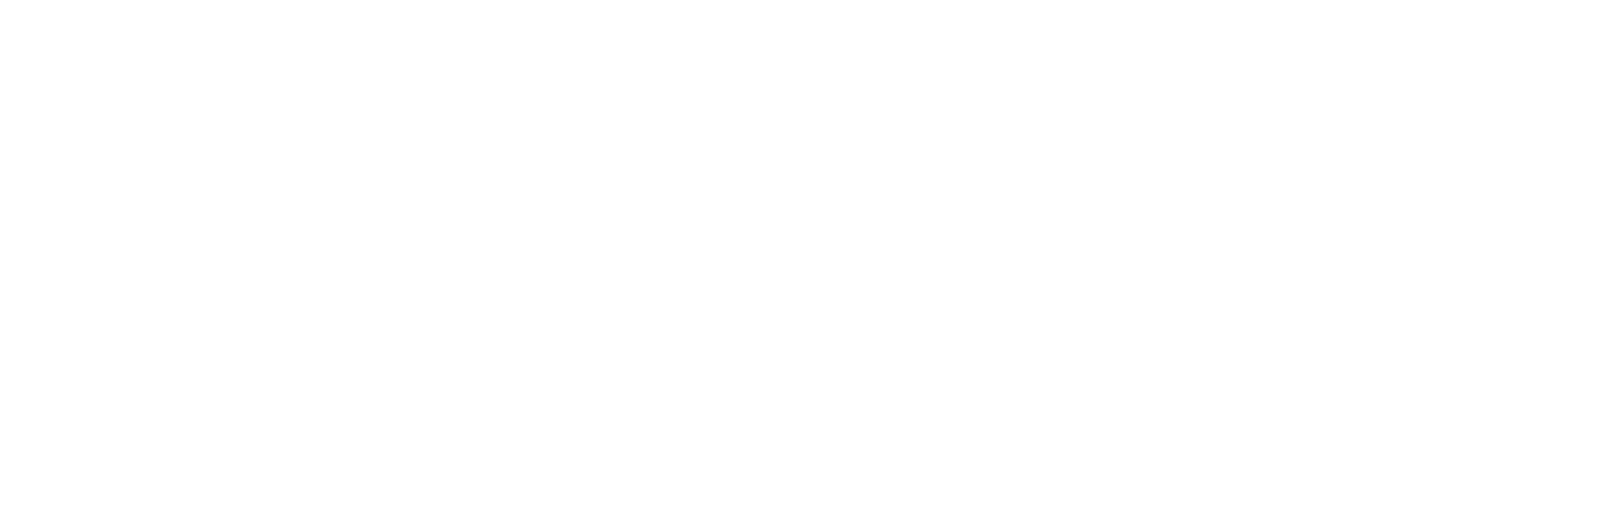 Cleantech Leadership Climate Forum Logo